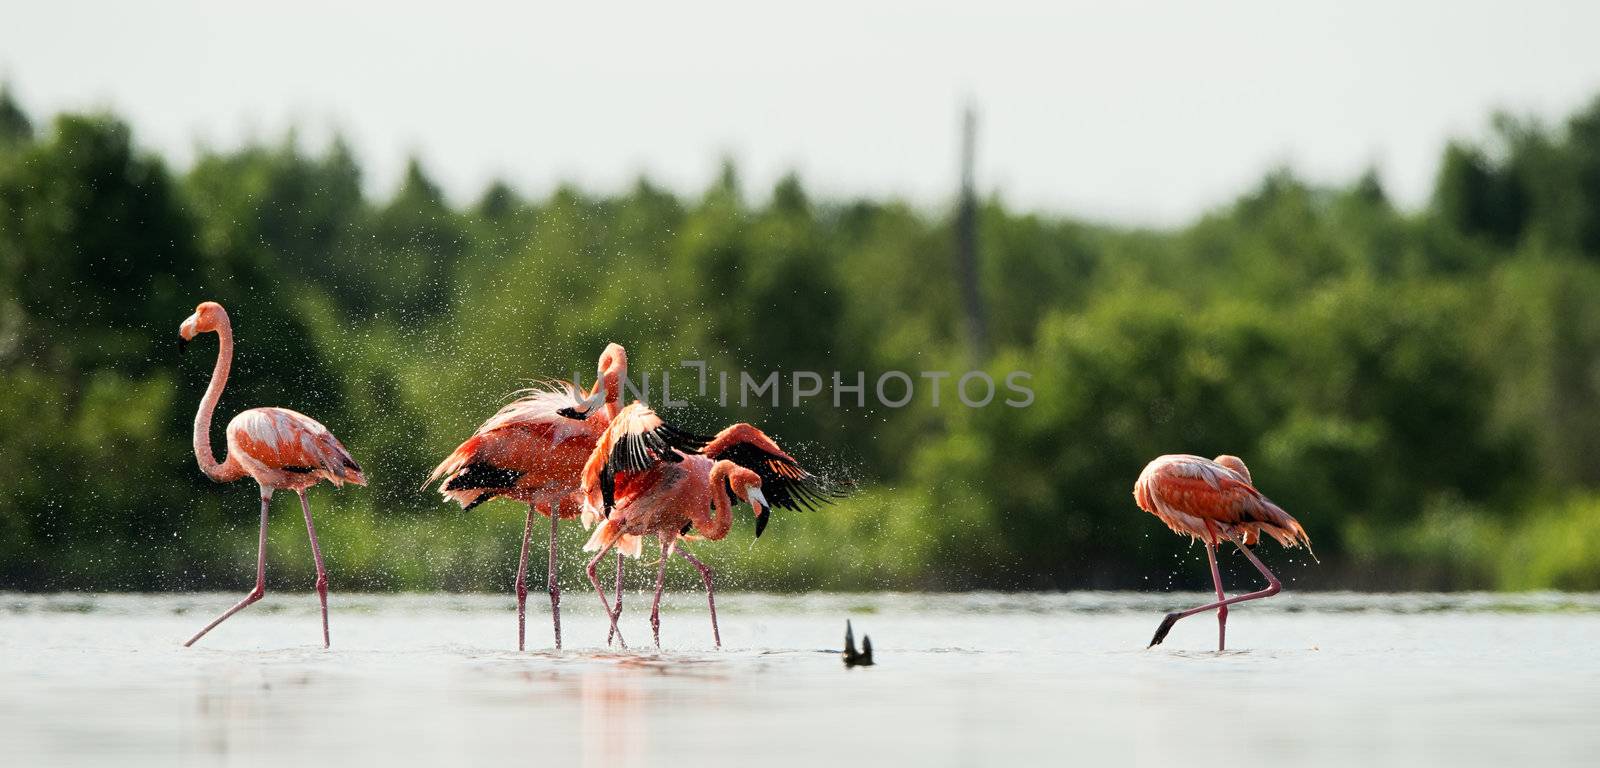 Caribean Flamingo bathing by SURZ